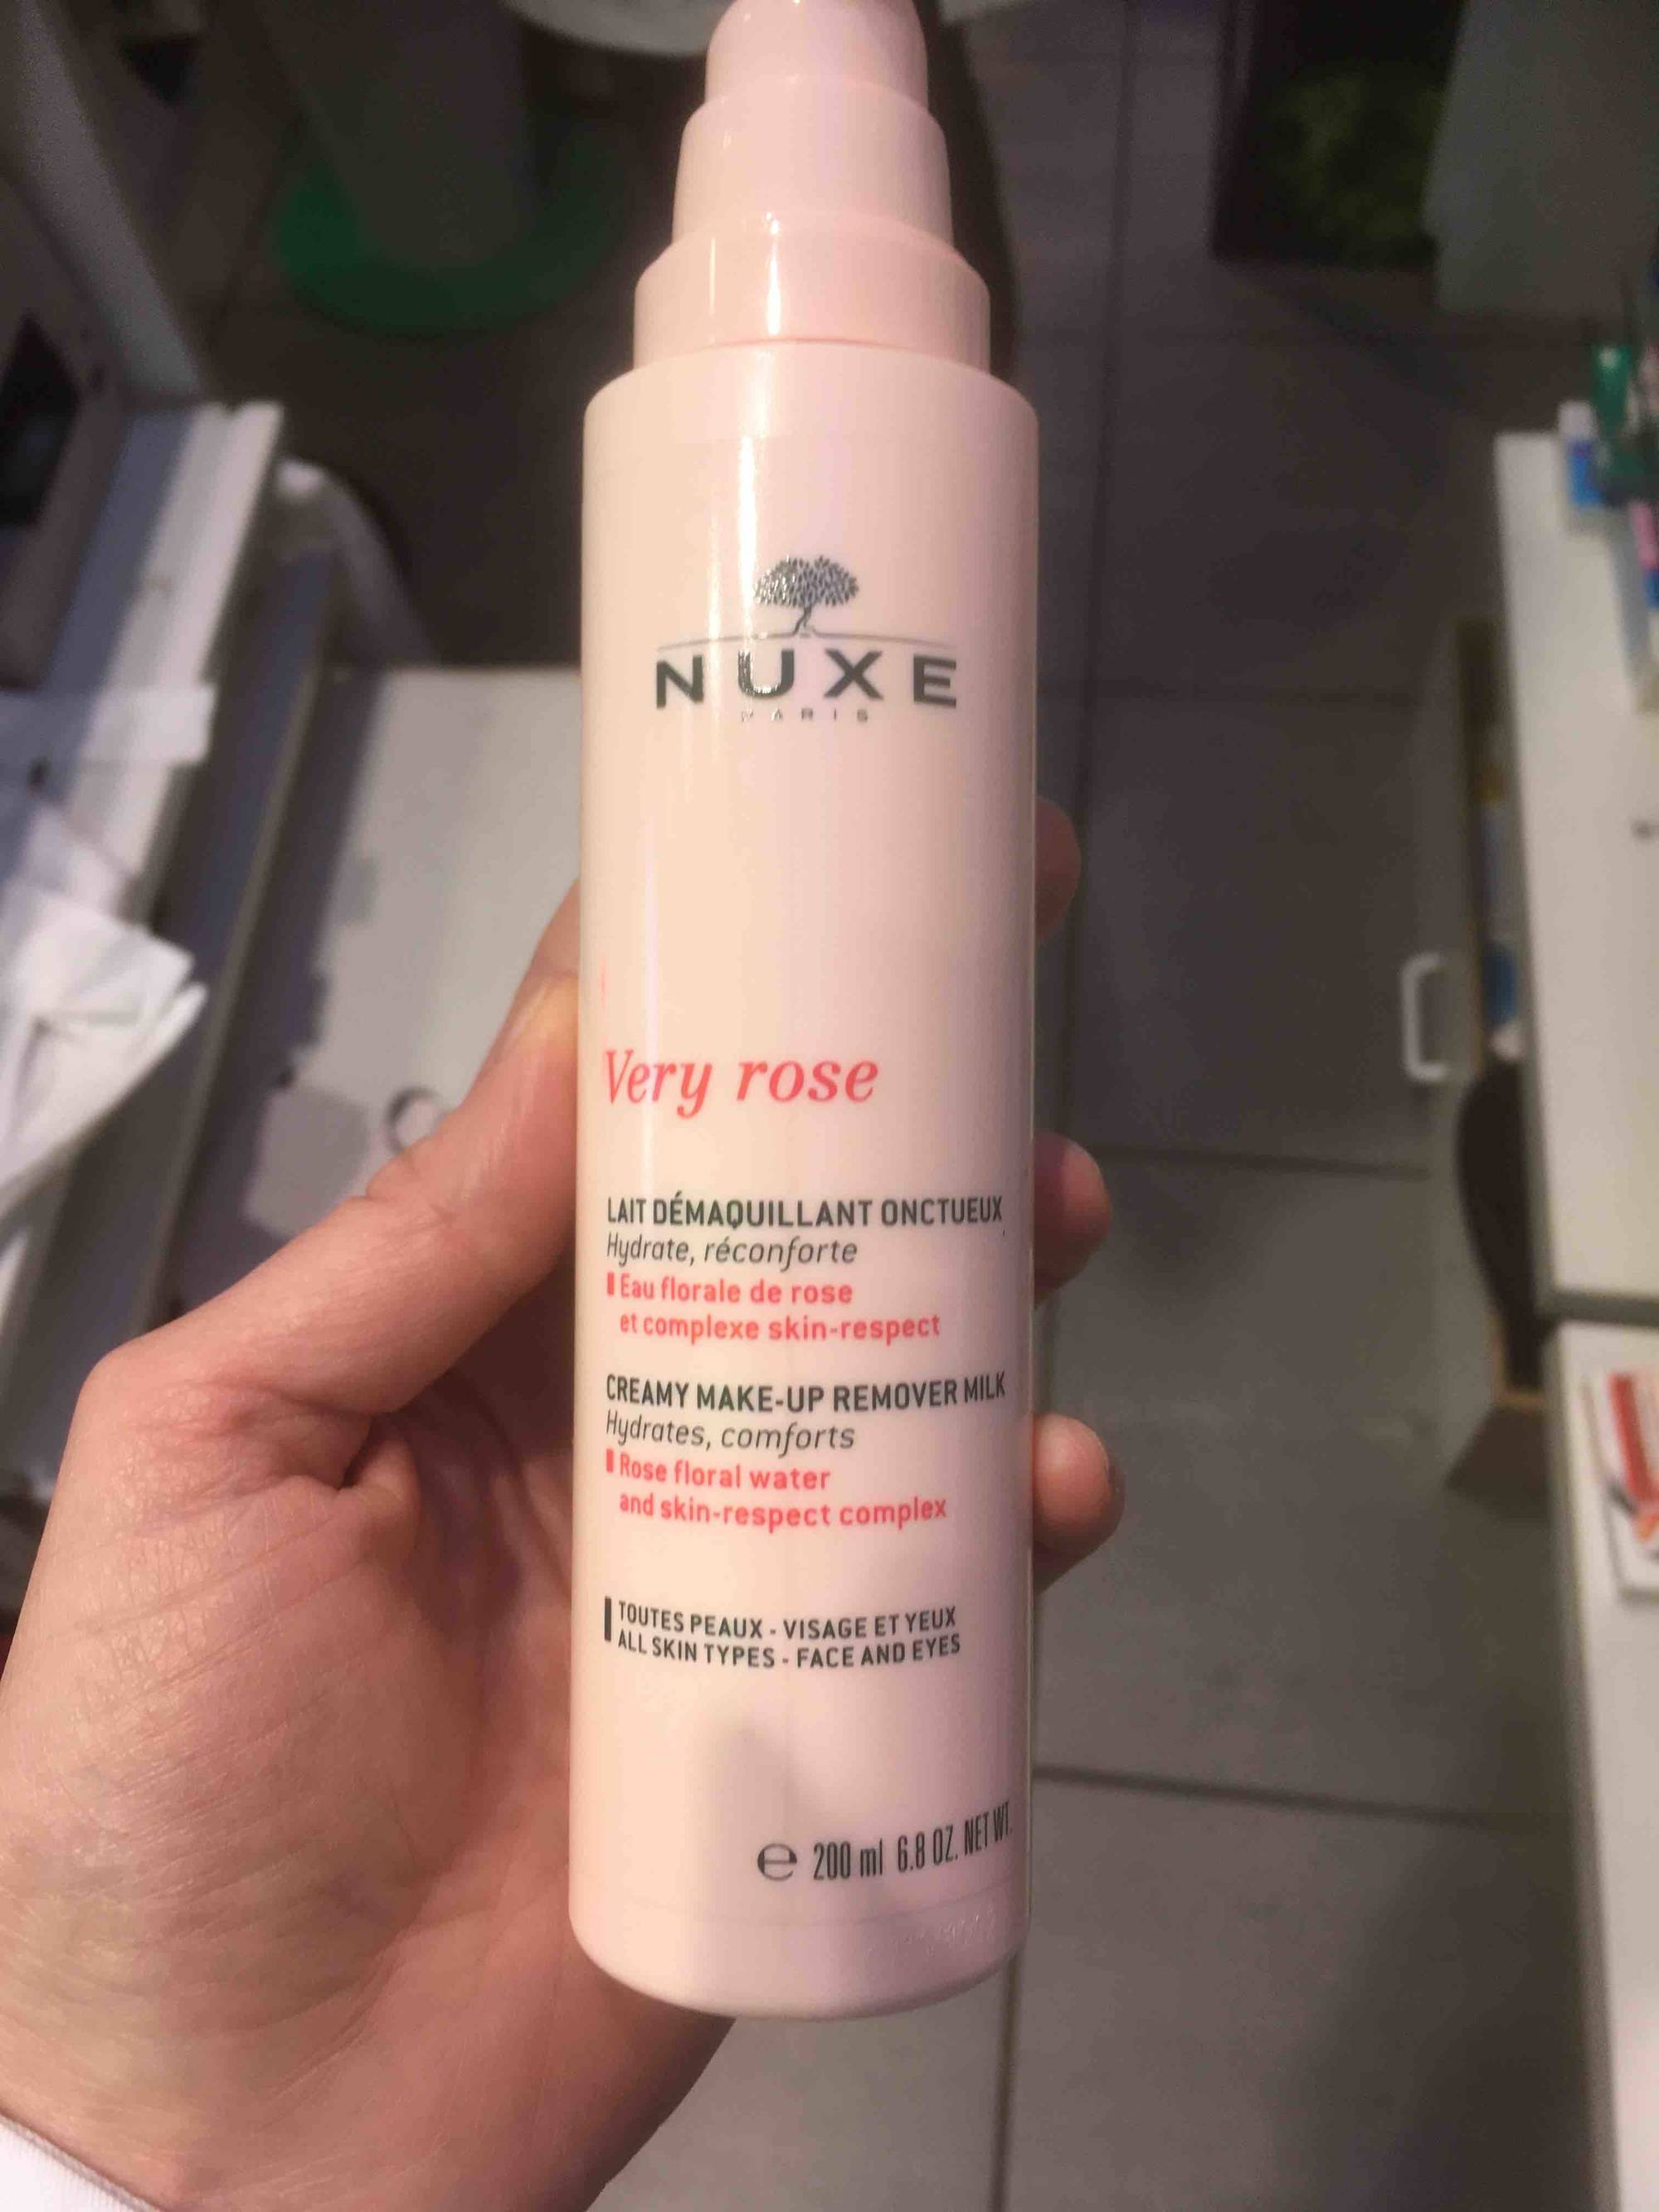 NUXE - Very rose - Lait démaquillant onctueux